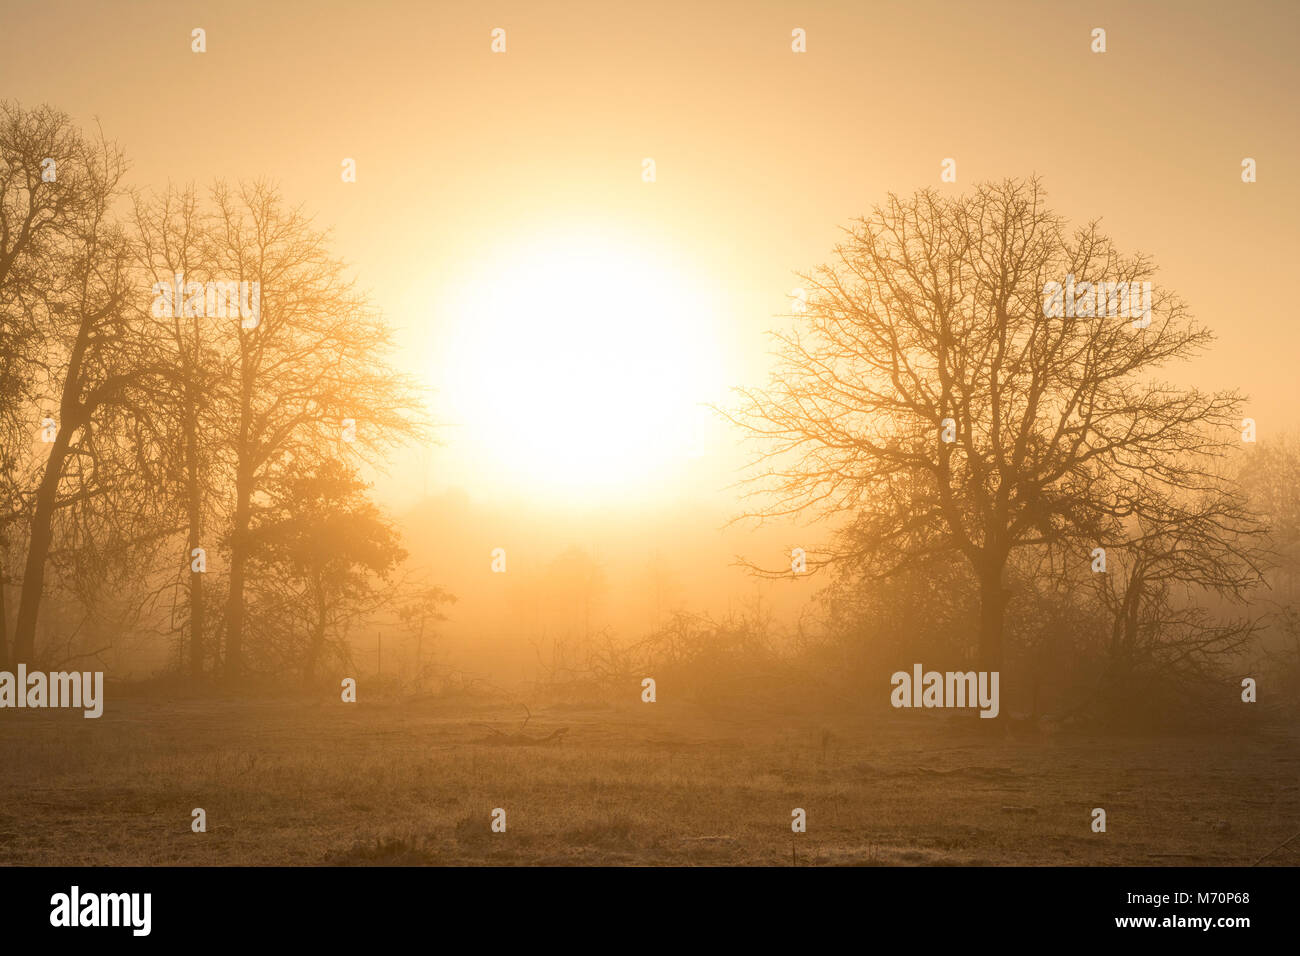 Foggy sunrise in golden tones in a rural pasture landscape Stock Photo